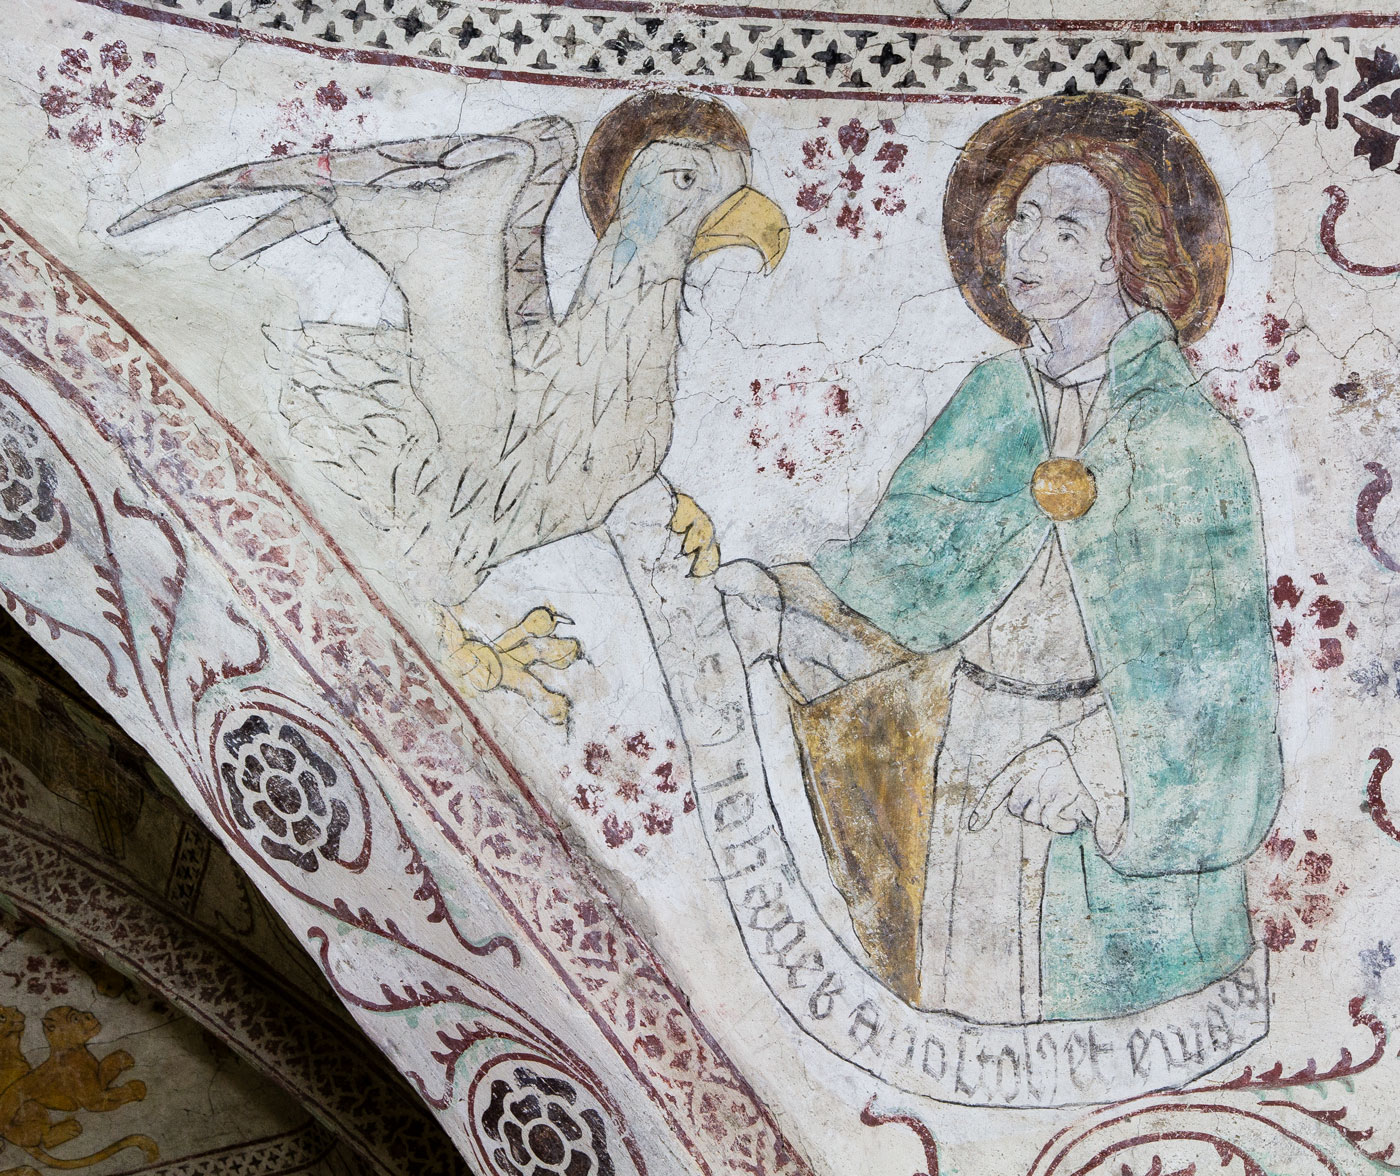 Evangelisten Johannes med sin symbol, örnen (S) - Almunge kyrka